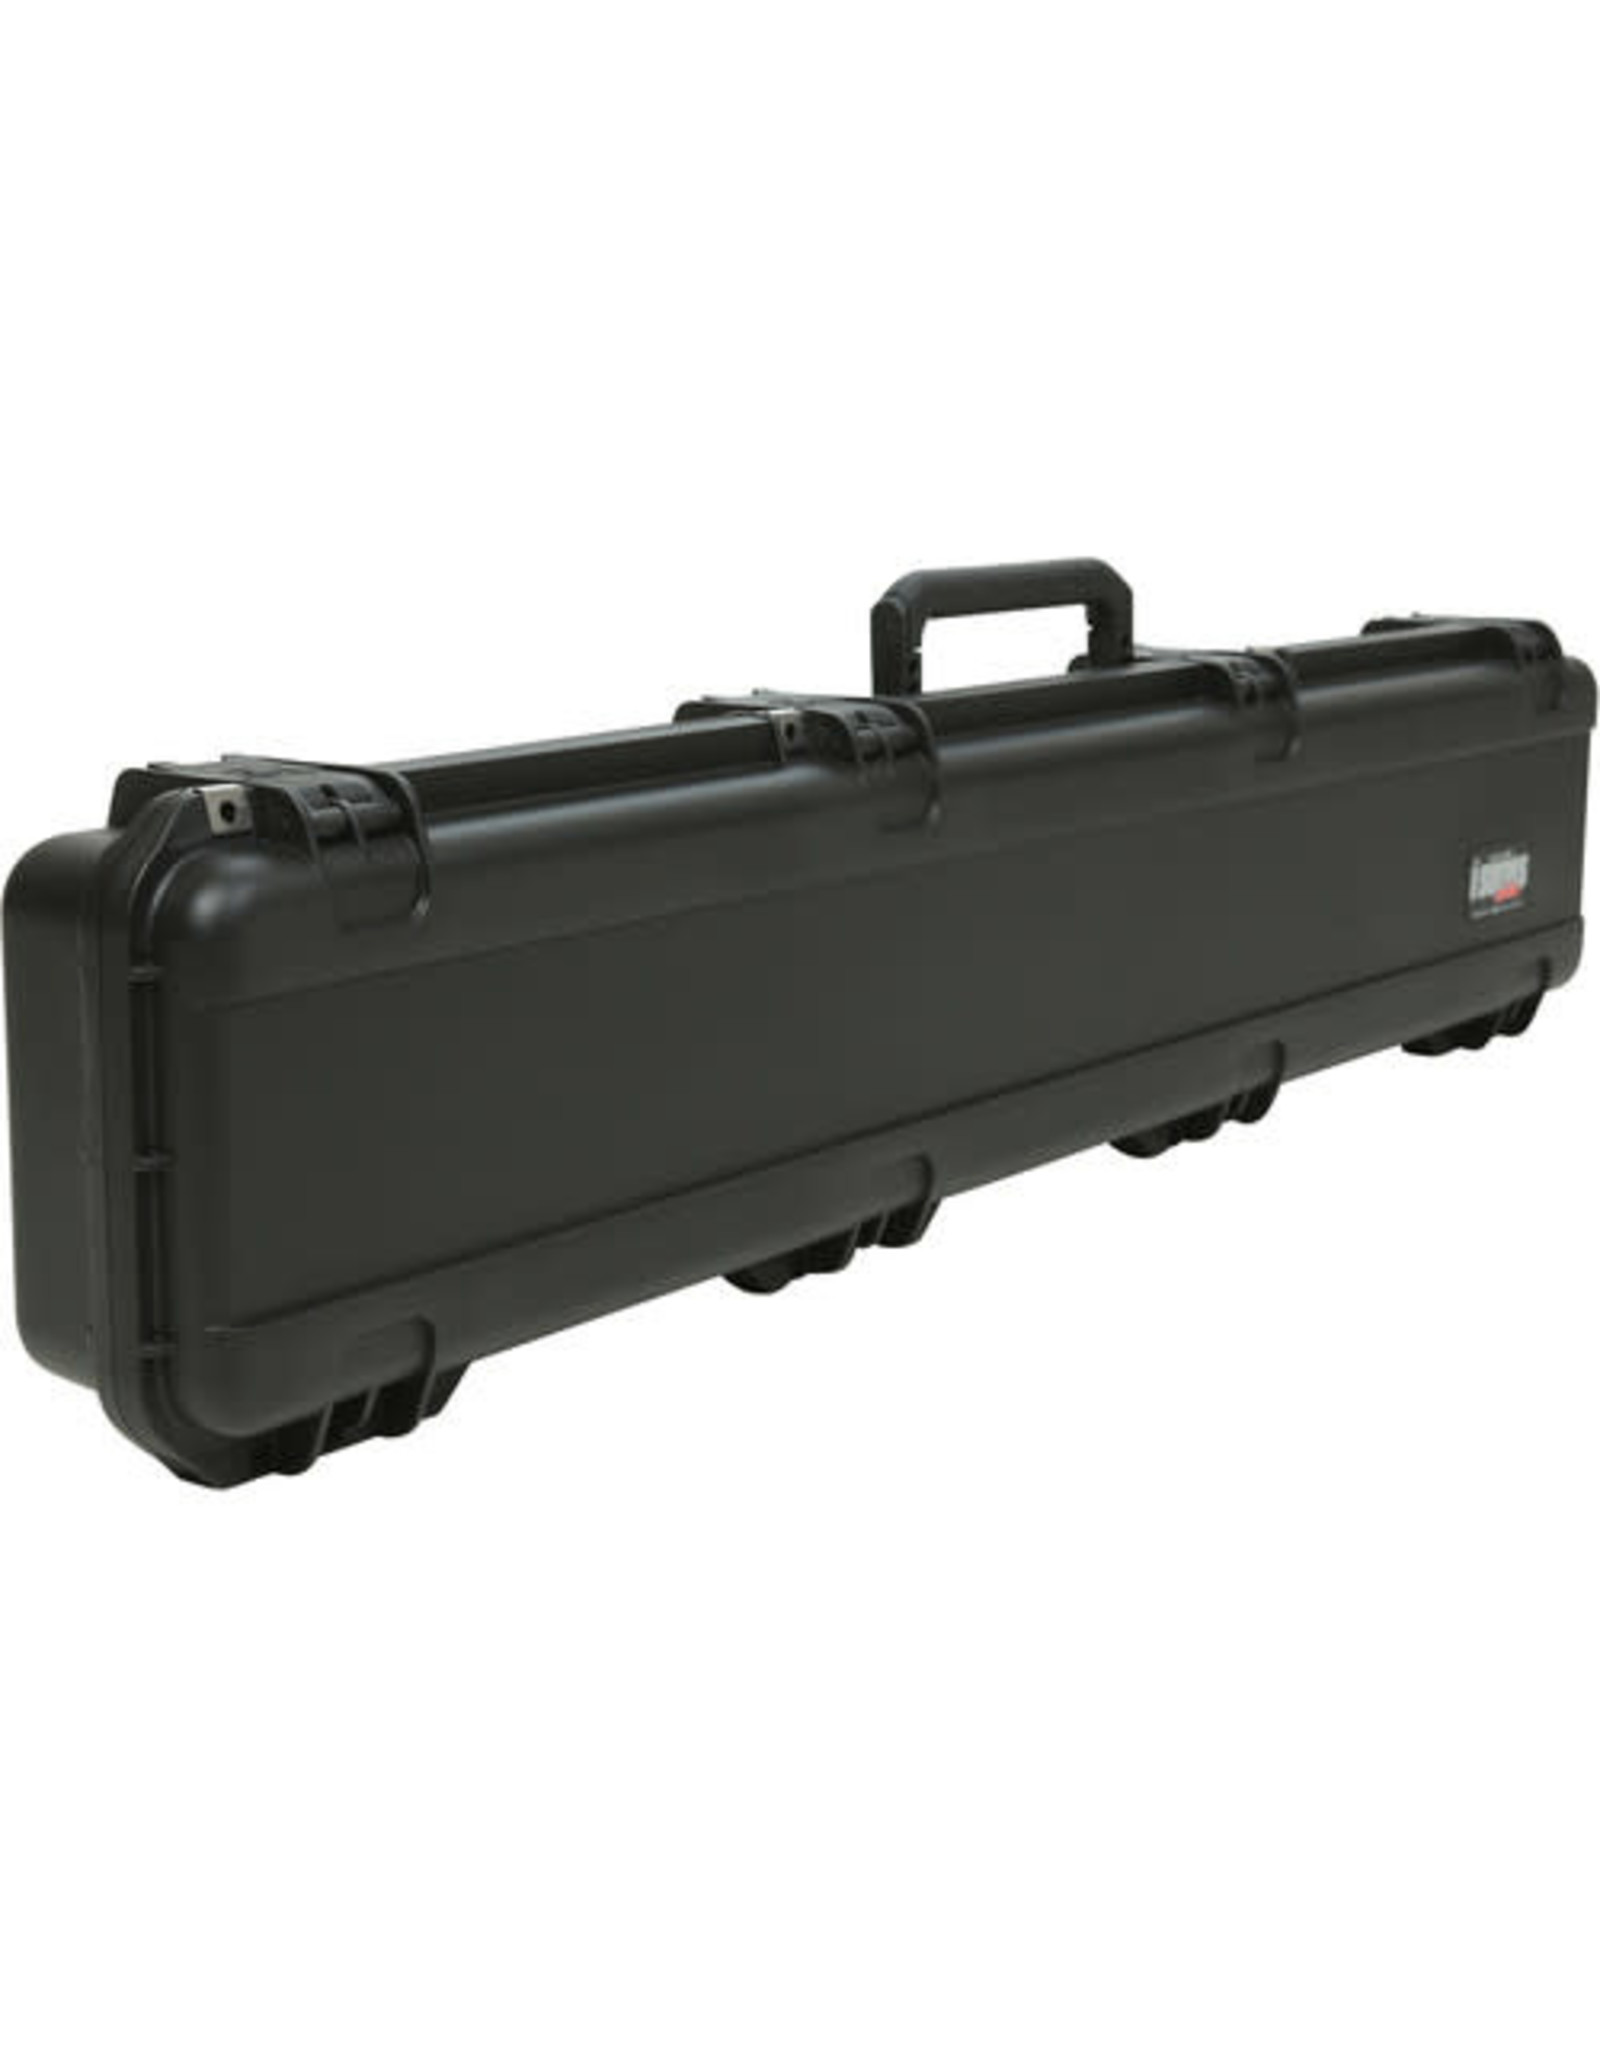 SKB Cases SKB 3i Series 3i-4909-5B-L Wheeled Waterproof Utility Case with Layered Foam (Black) - 3i-4909-5B-L